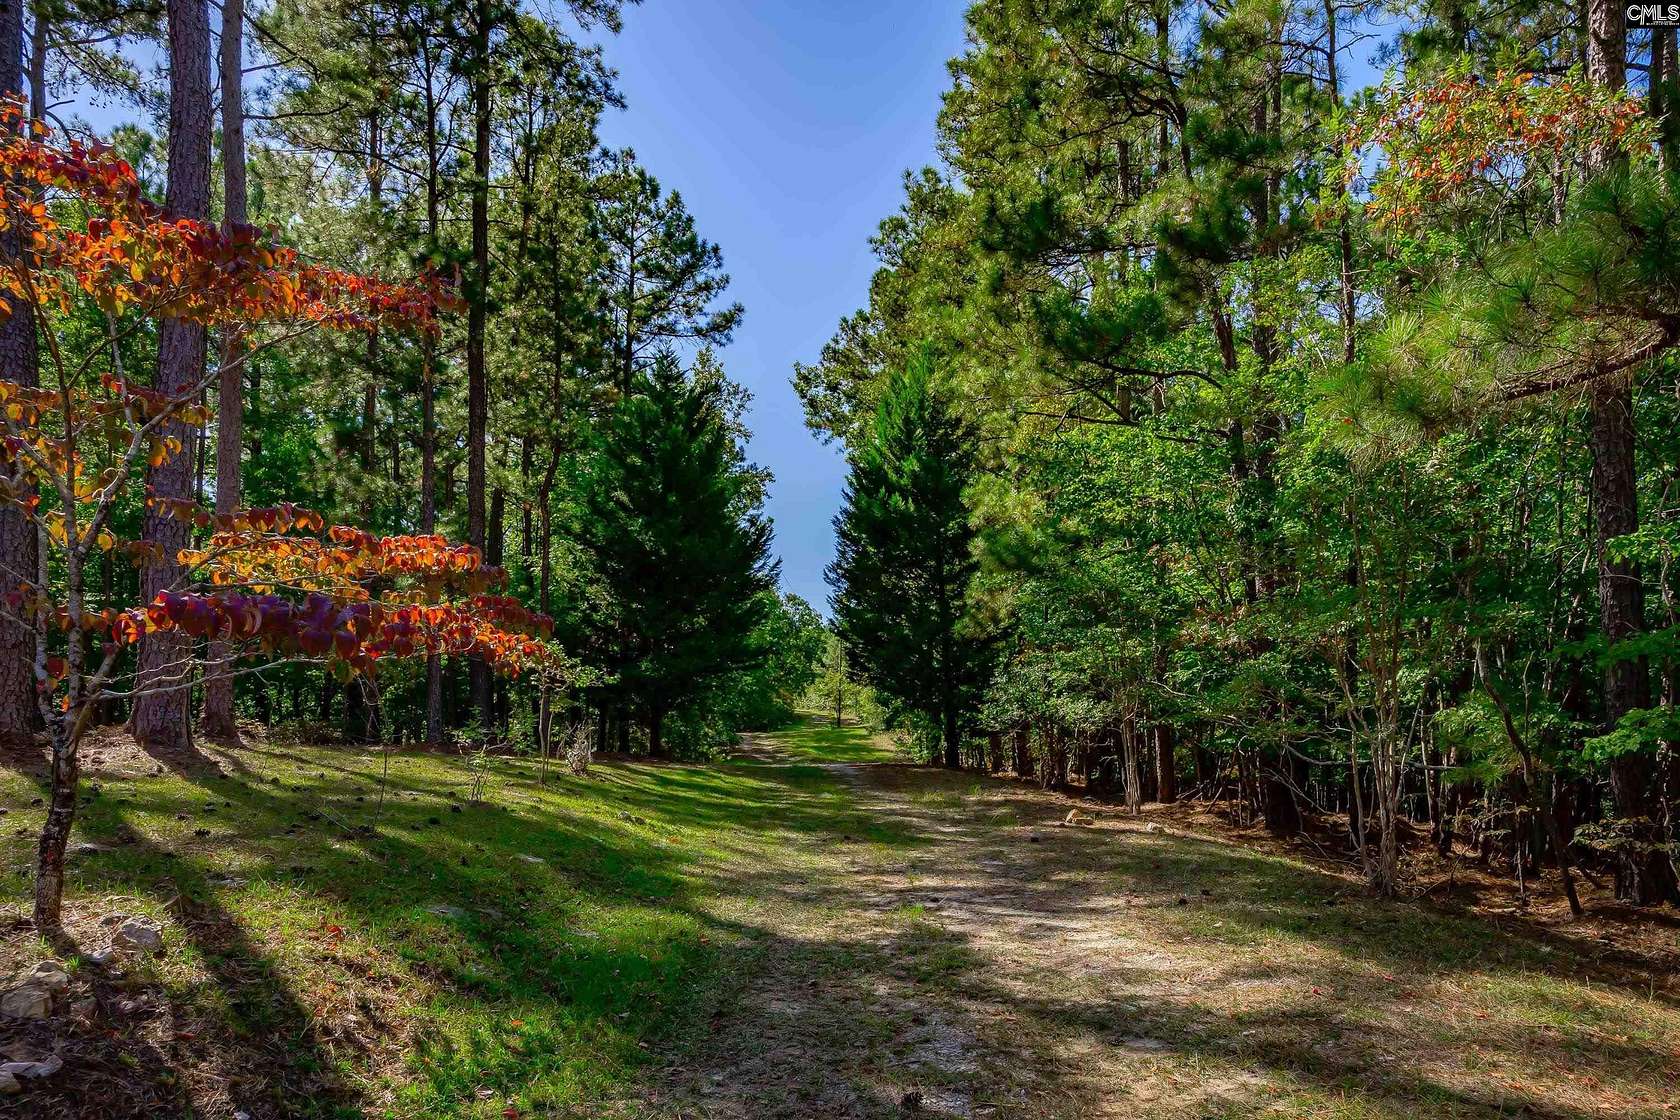 315 Acres of Land for Sale in Ridgeway, South Carolina